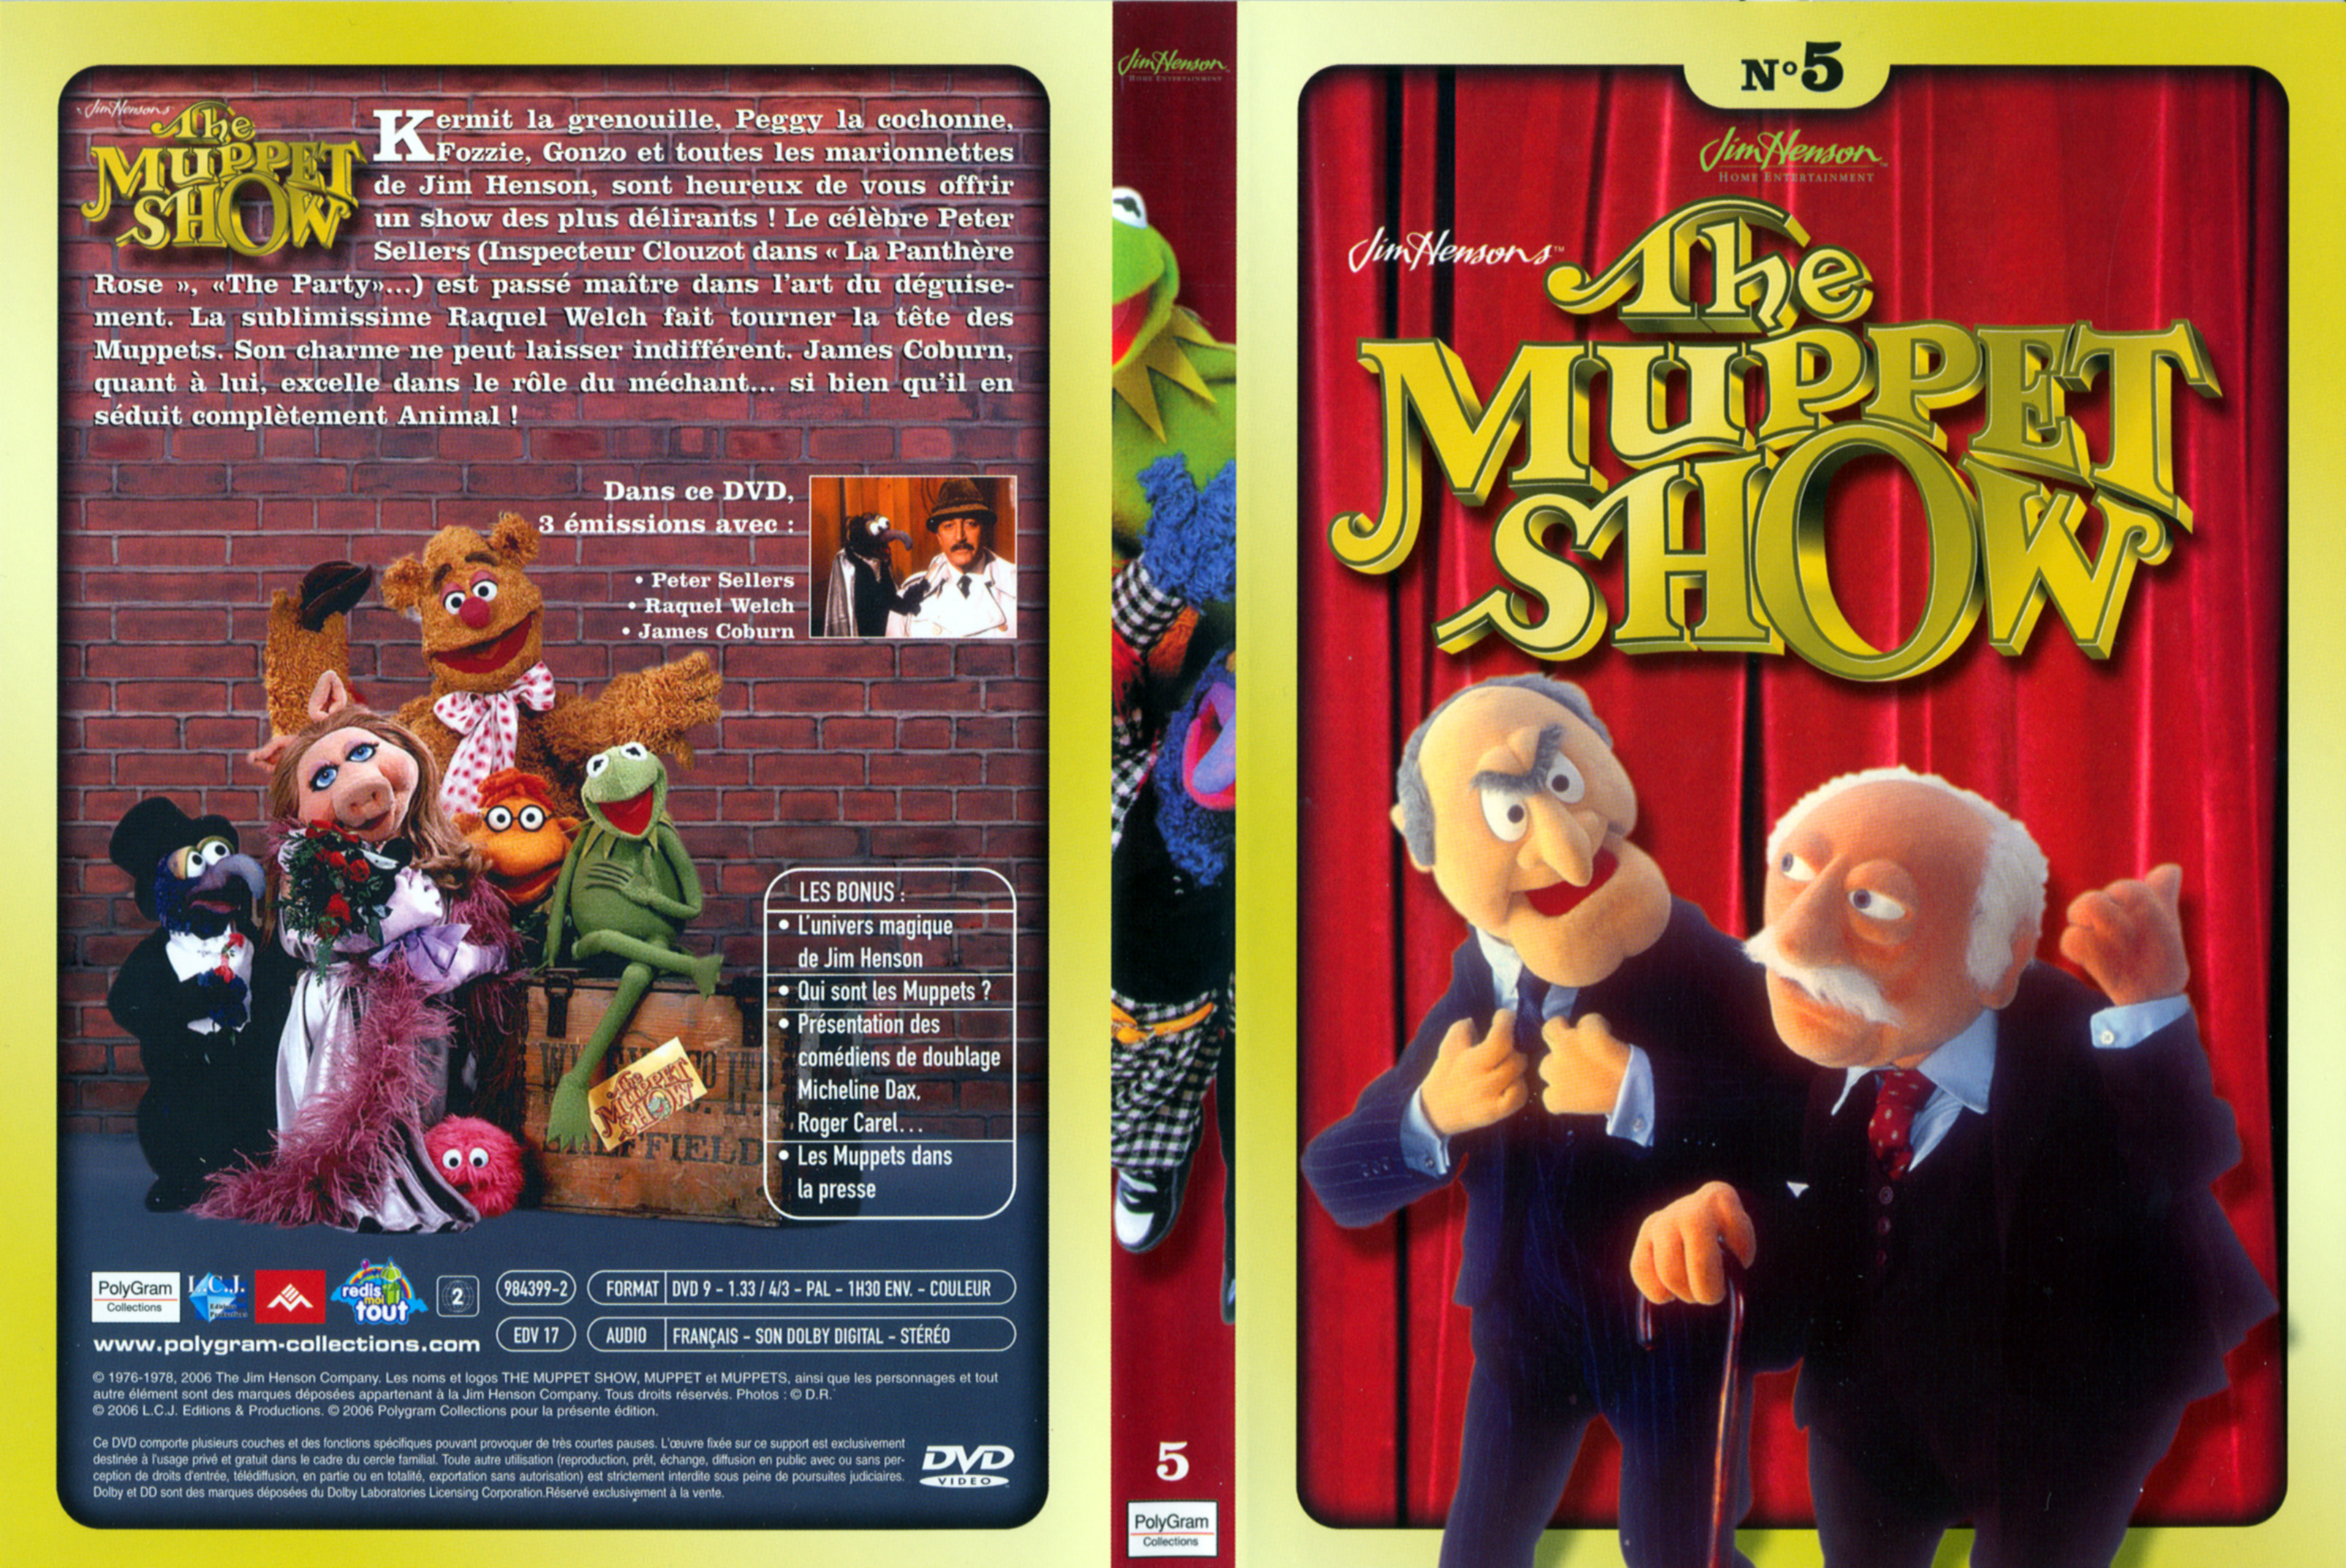 Jaquette DVD The muppet show vol 5